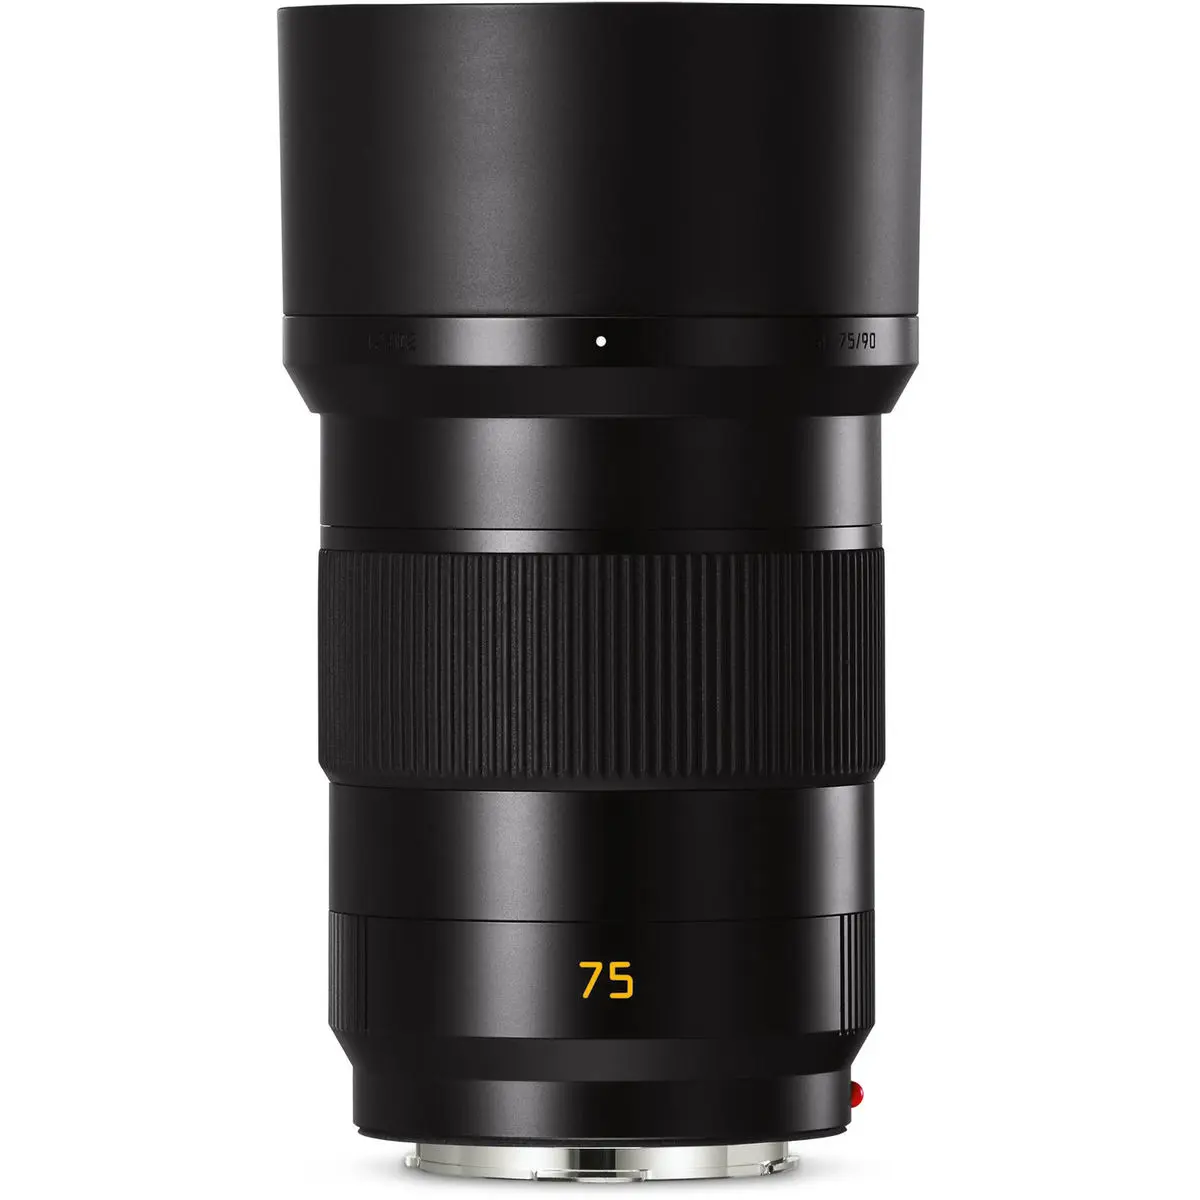 2. Leica APO-Summicron-SL 75mm F2 (11178) Lens